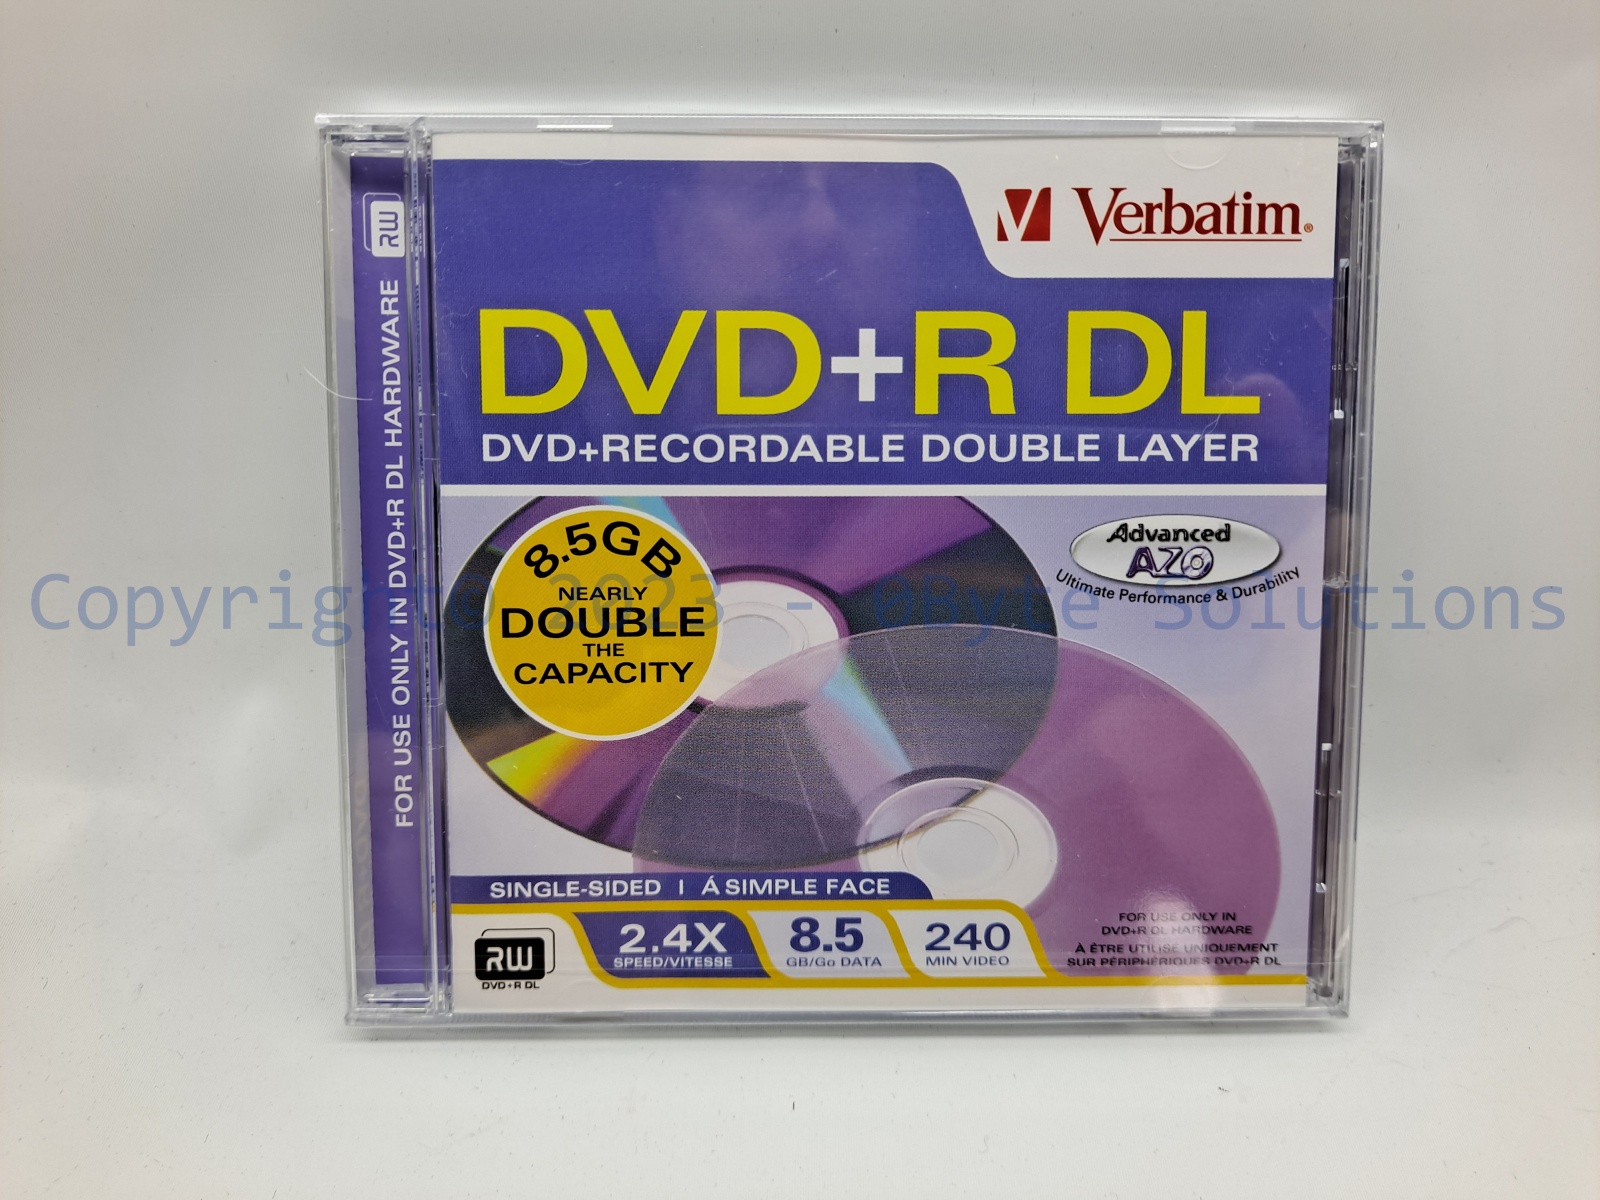 Verbatim #94912 Dual Layer DVD+R DL - 2.4x 8.5GB Media